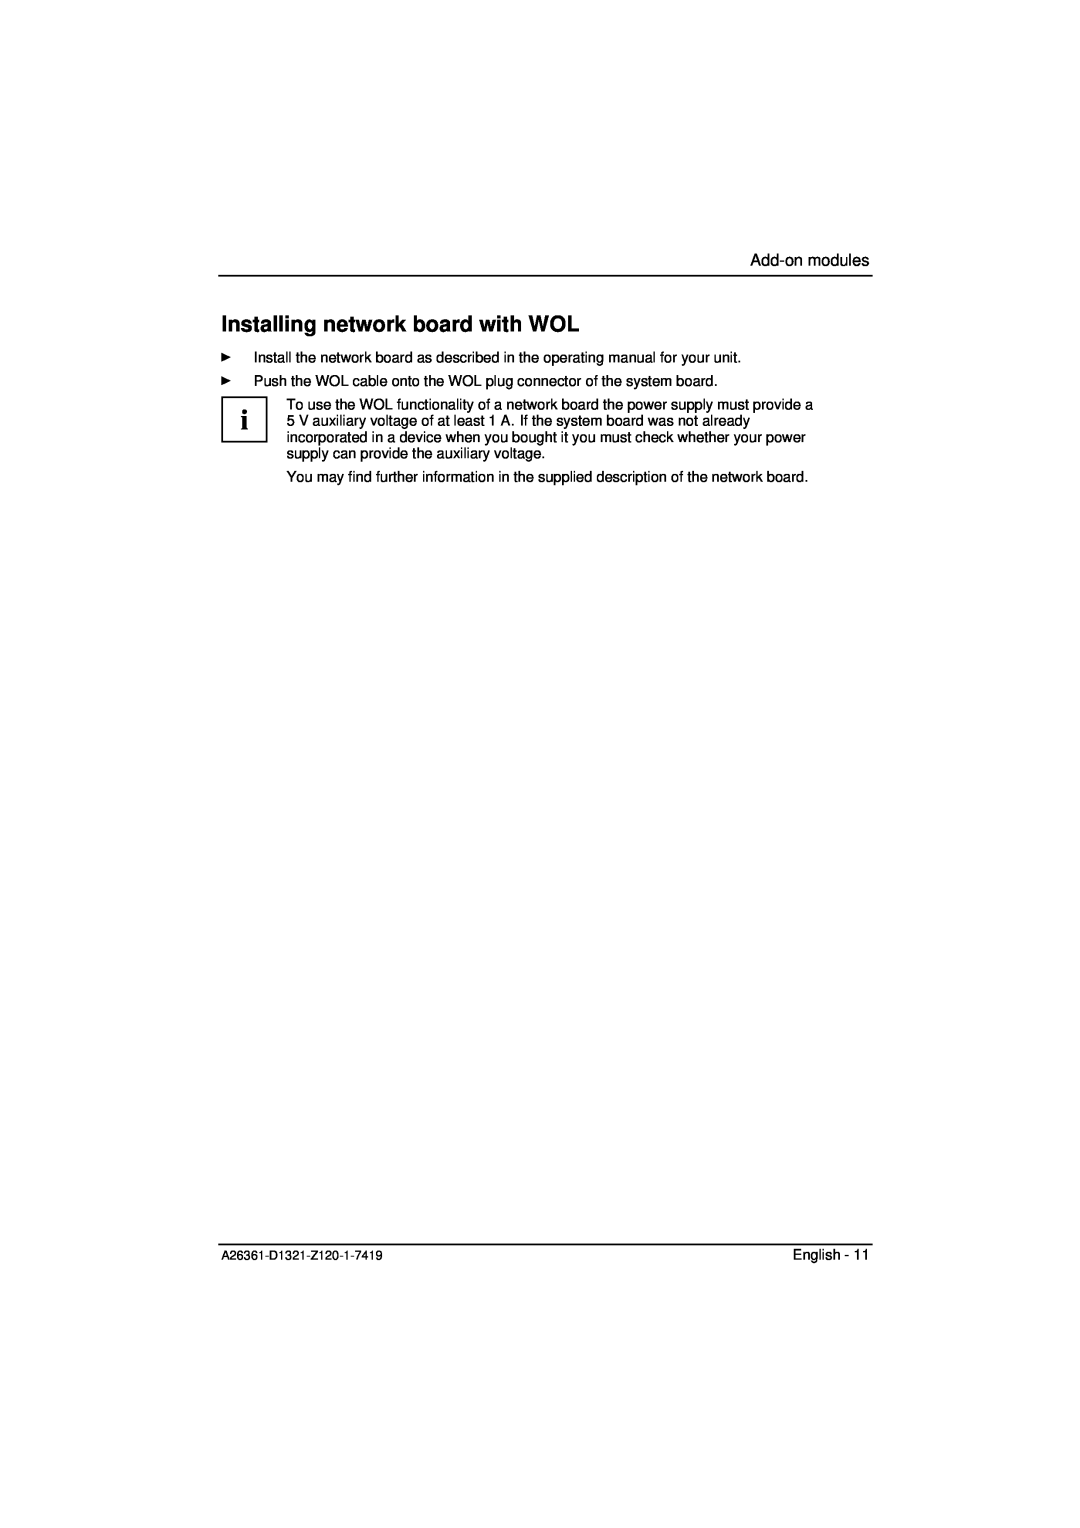 Fujitsu D1321 technical manual Installing network board with WOL, Add-on modules 